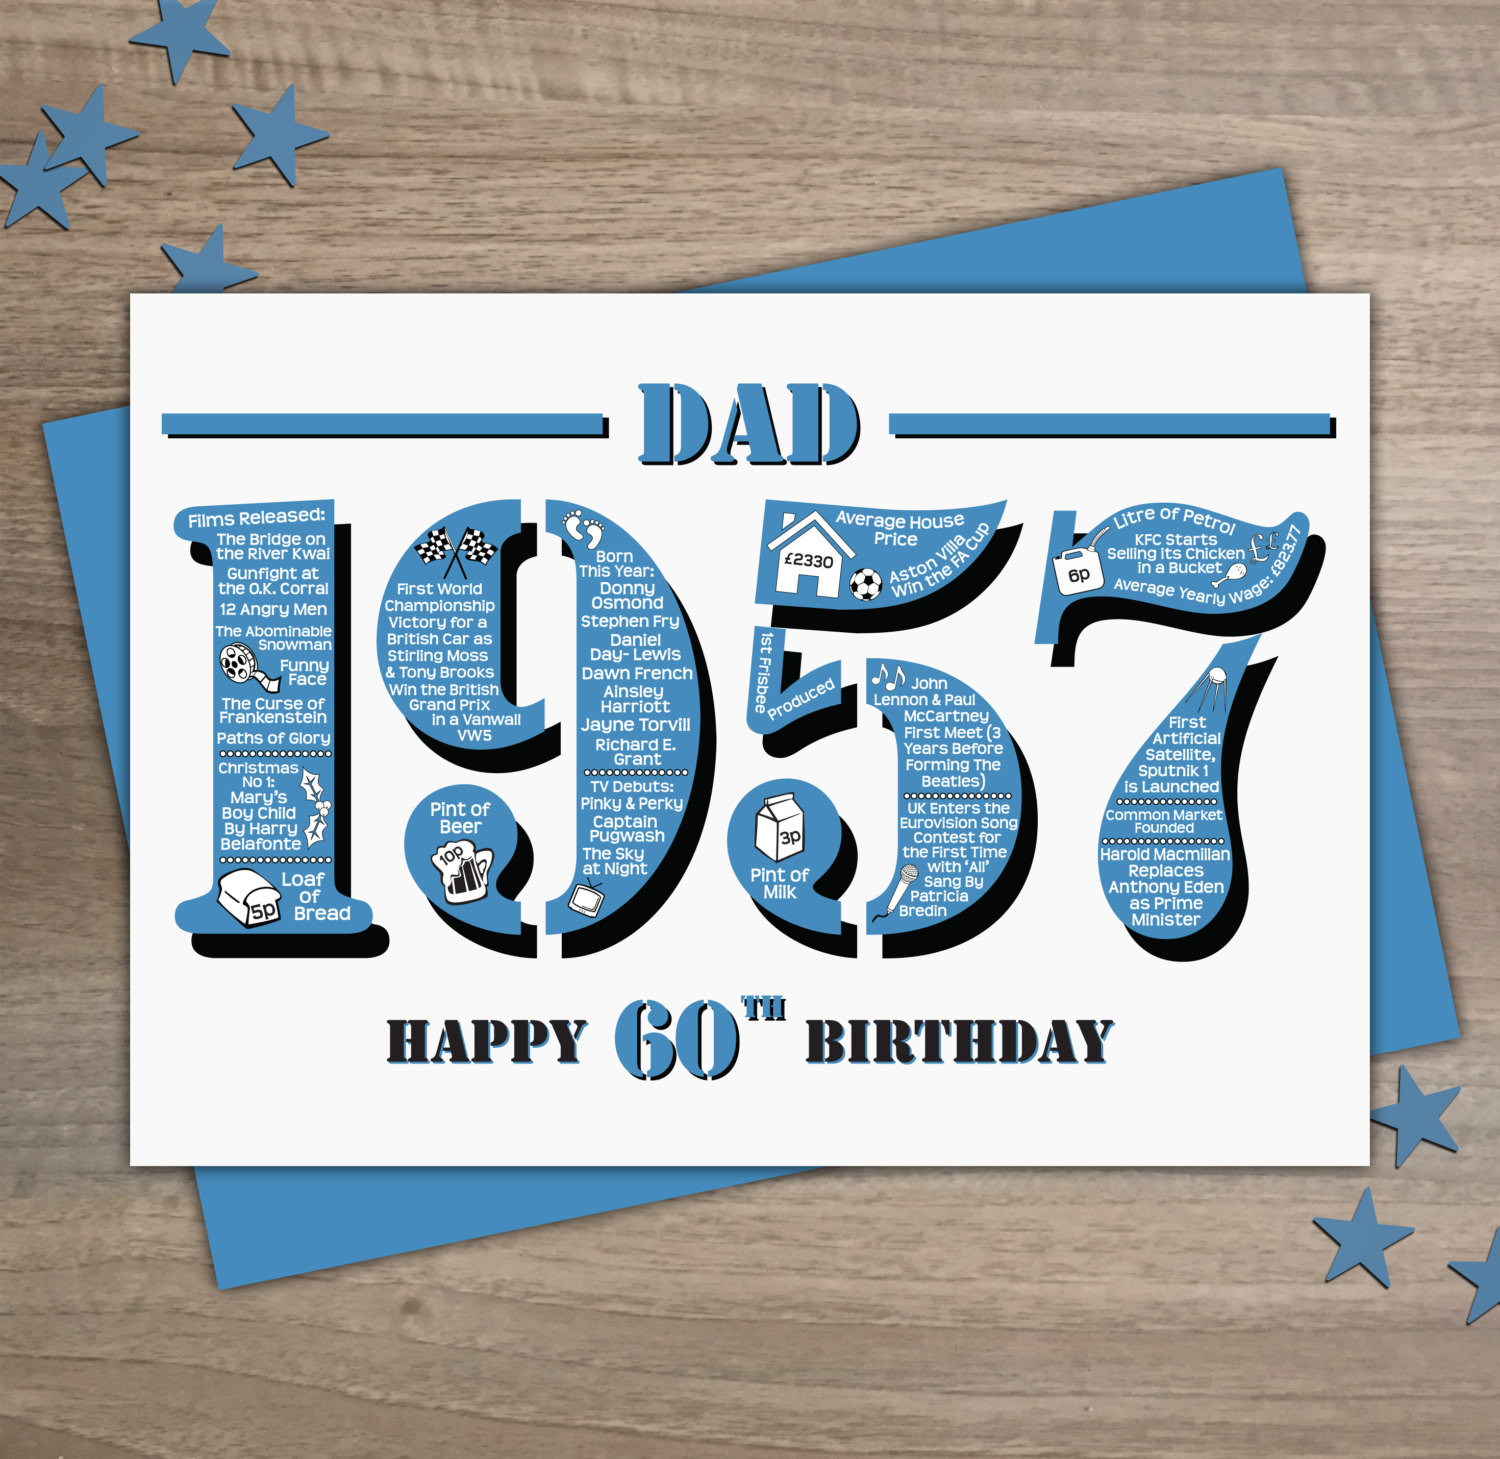 Happy 60th Birthday Cards
 Happy 60th Birthday Dad Greetings Card Born In 1957 British